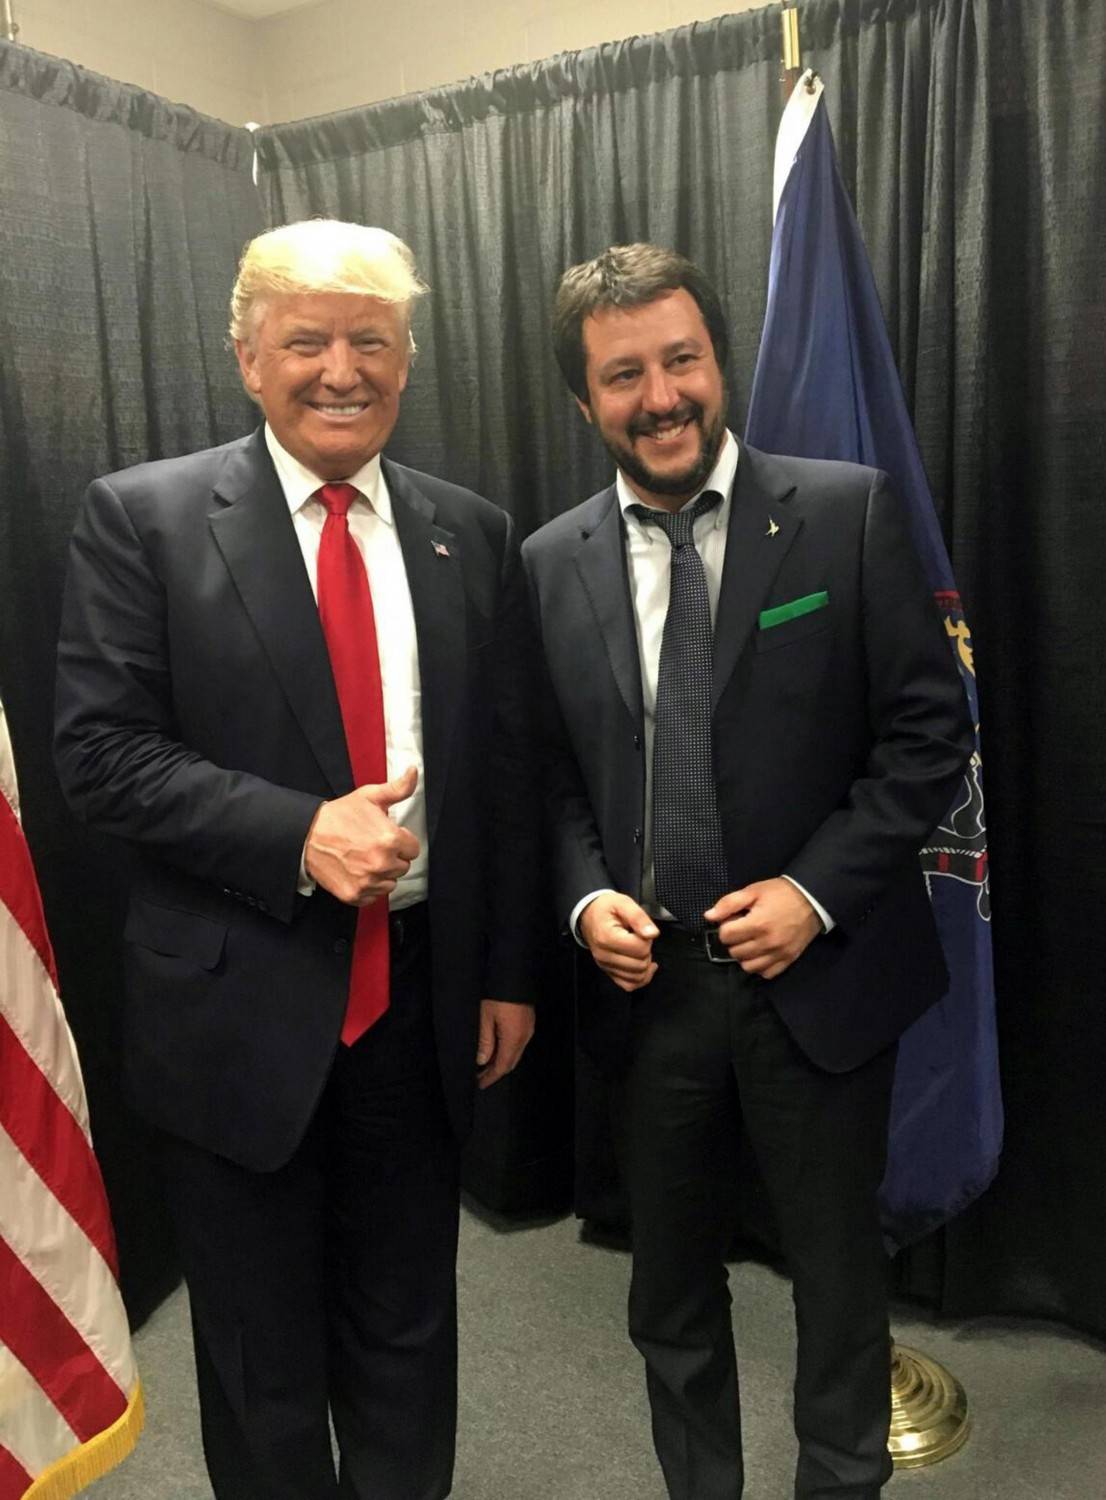 Trump incontra Salvini a Filadelfia: "Sarai presto premier"